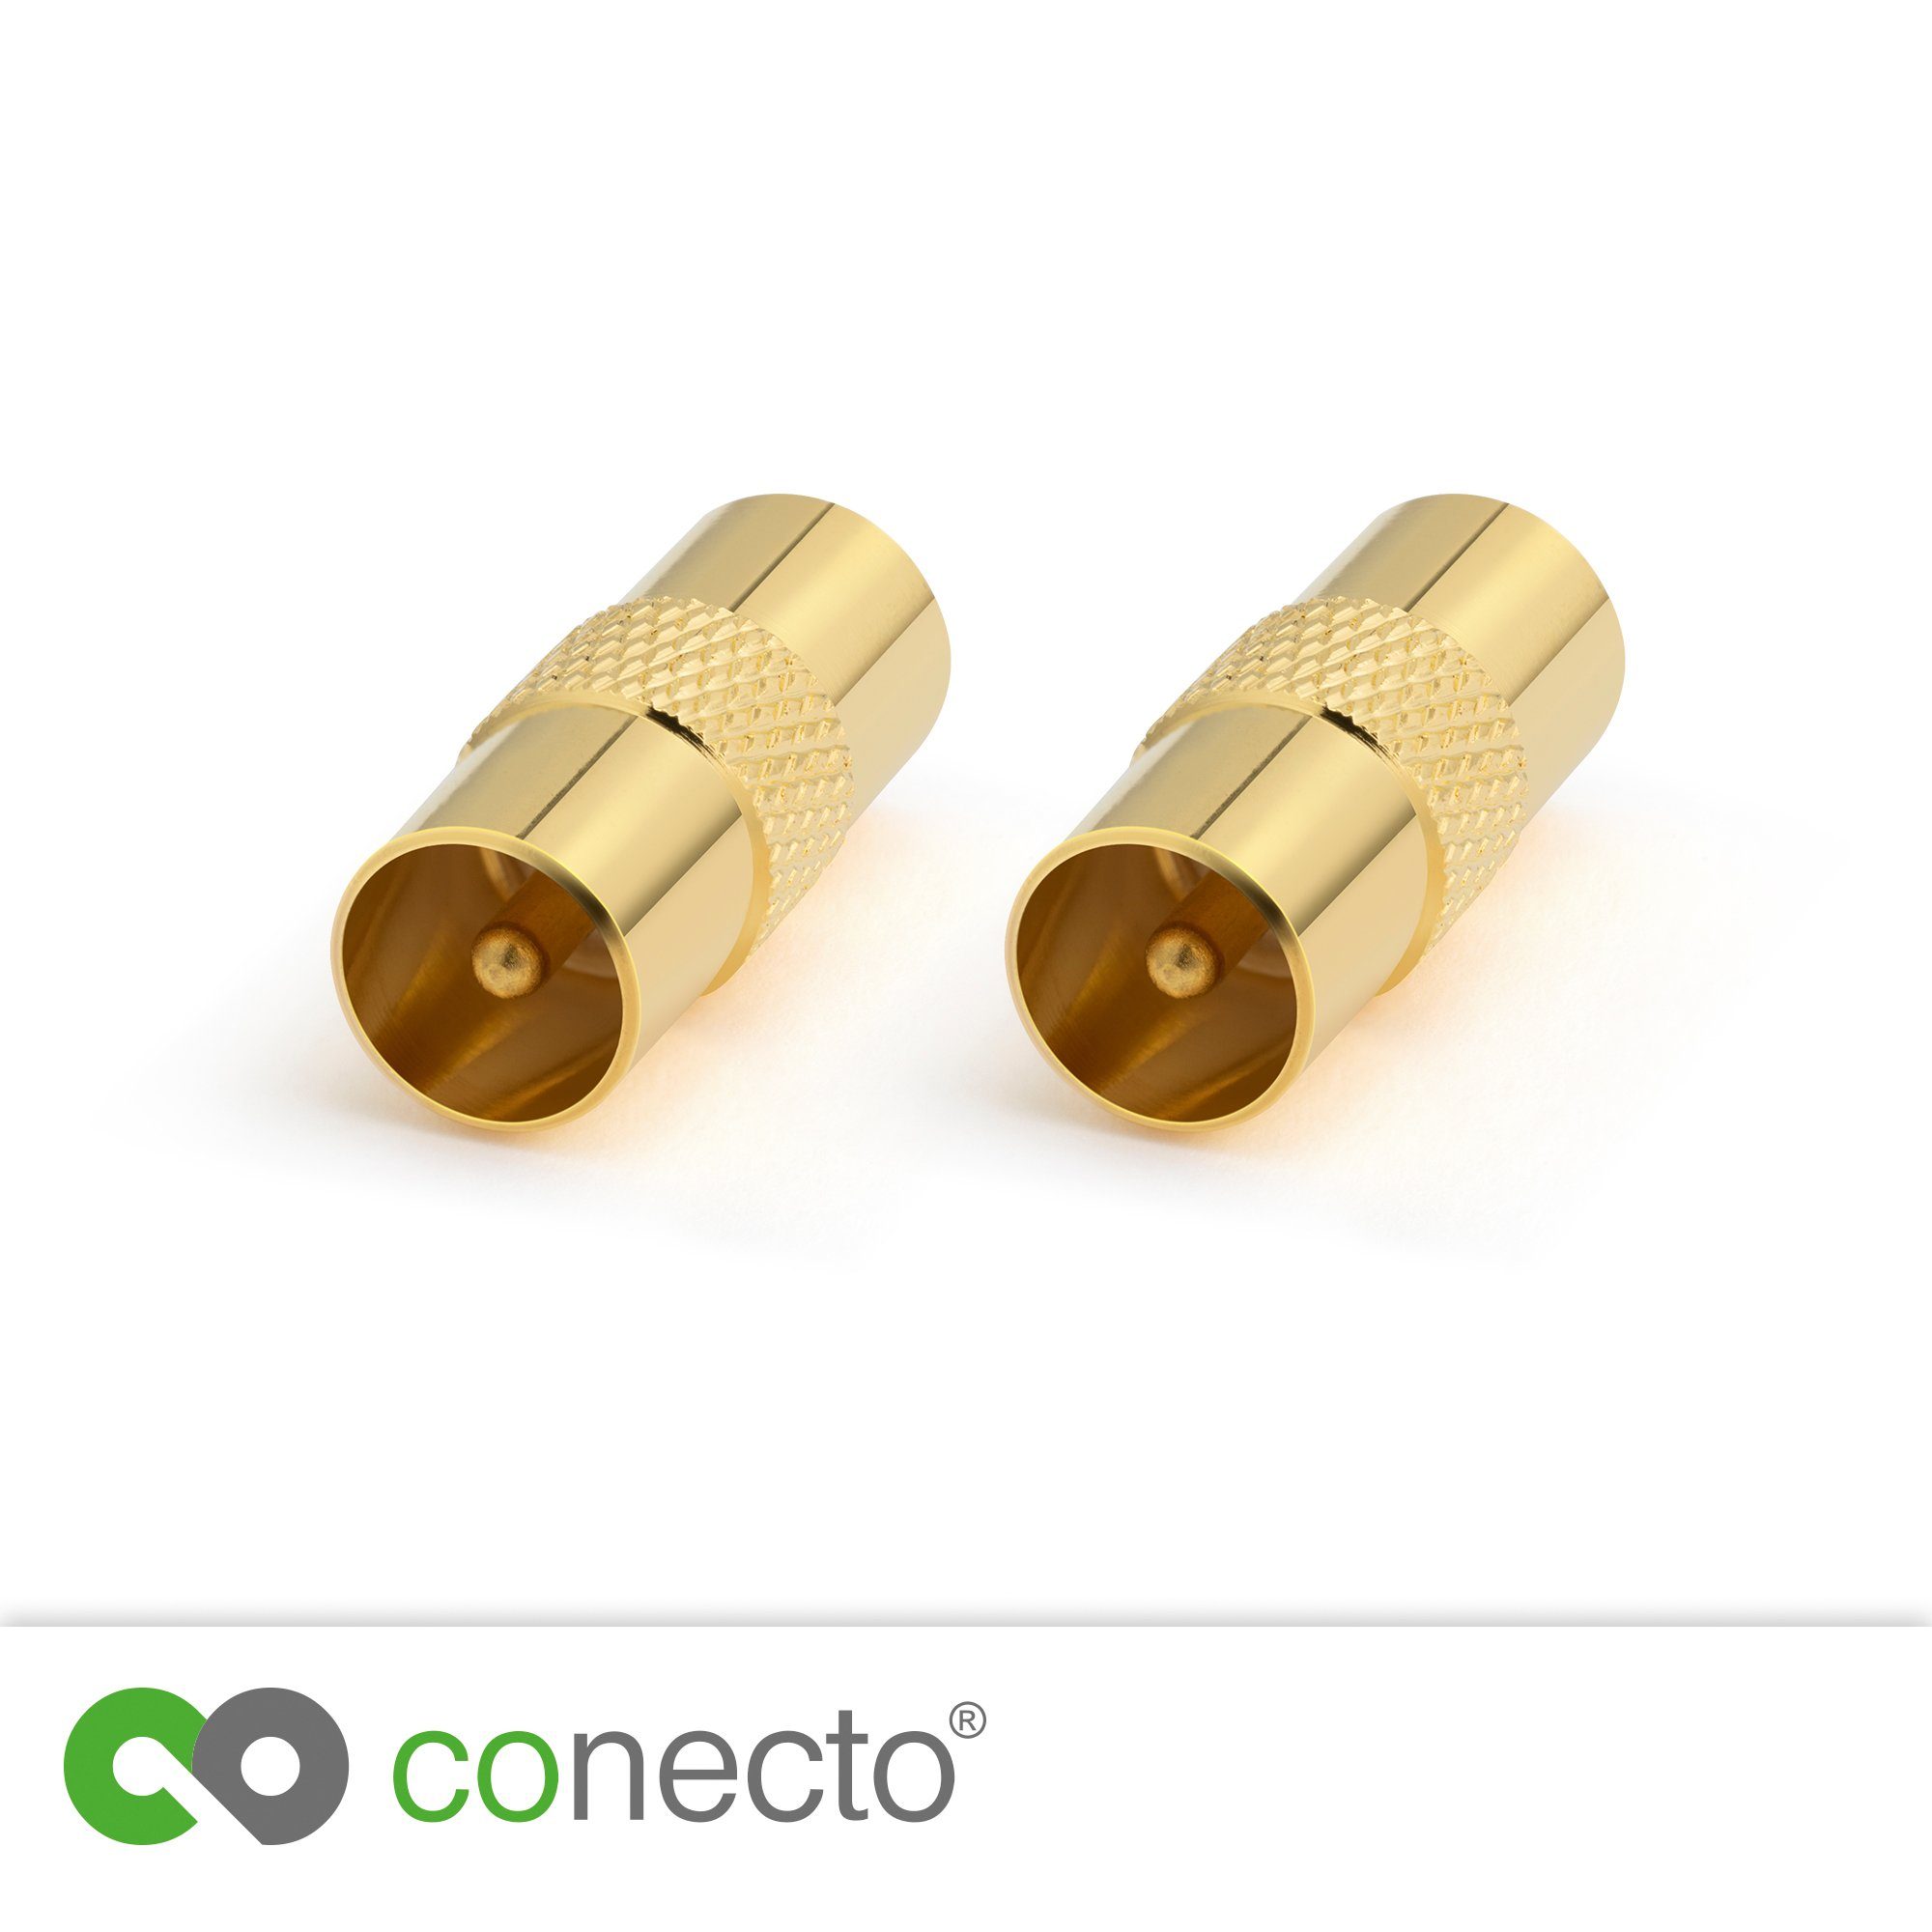 conecto conecto Antennen-Adapter, IEC-Stecker auf SAT-Kabel Adapter IEC-Stecker, zum